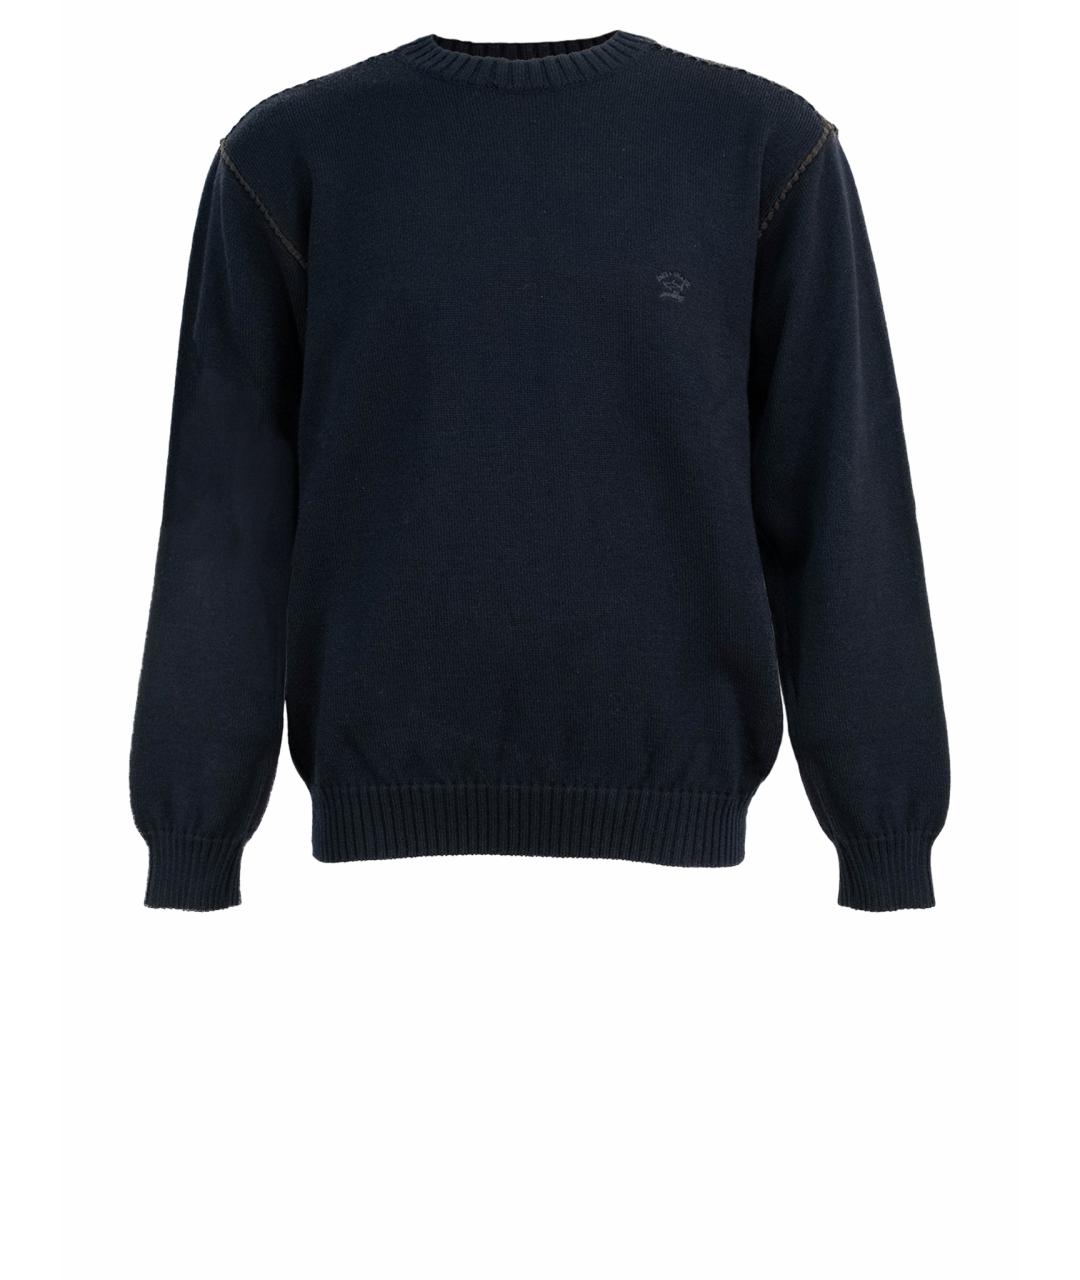 PAUL & SHARK Темно-синий шерстяной джемпер / свитер, фото 1